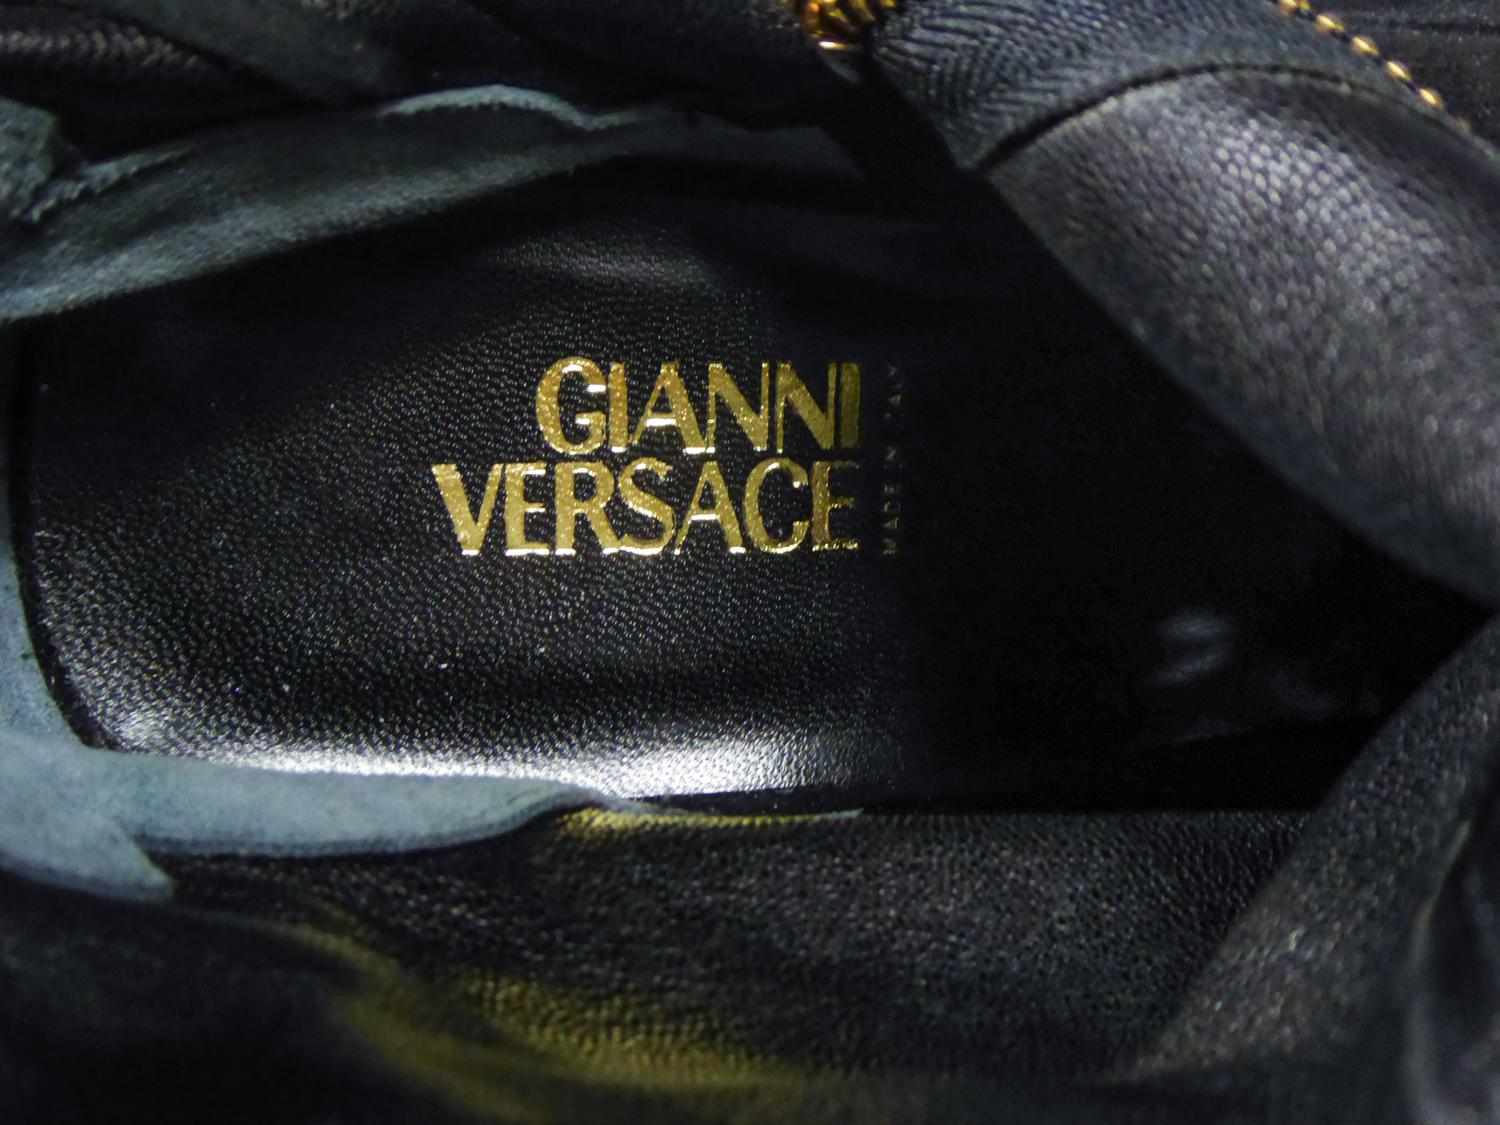 Gianni Versace Boots in Suede and Swarovski Rhinestone Circa 2000 For Sale 6